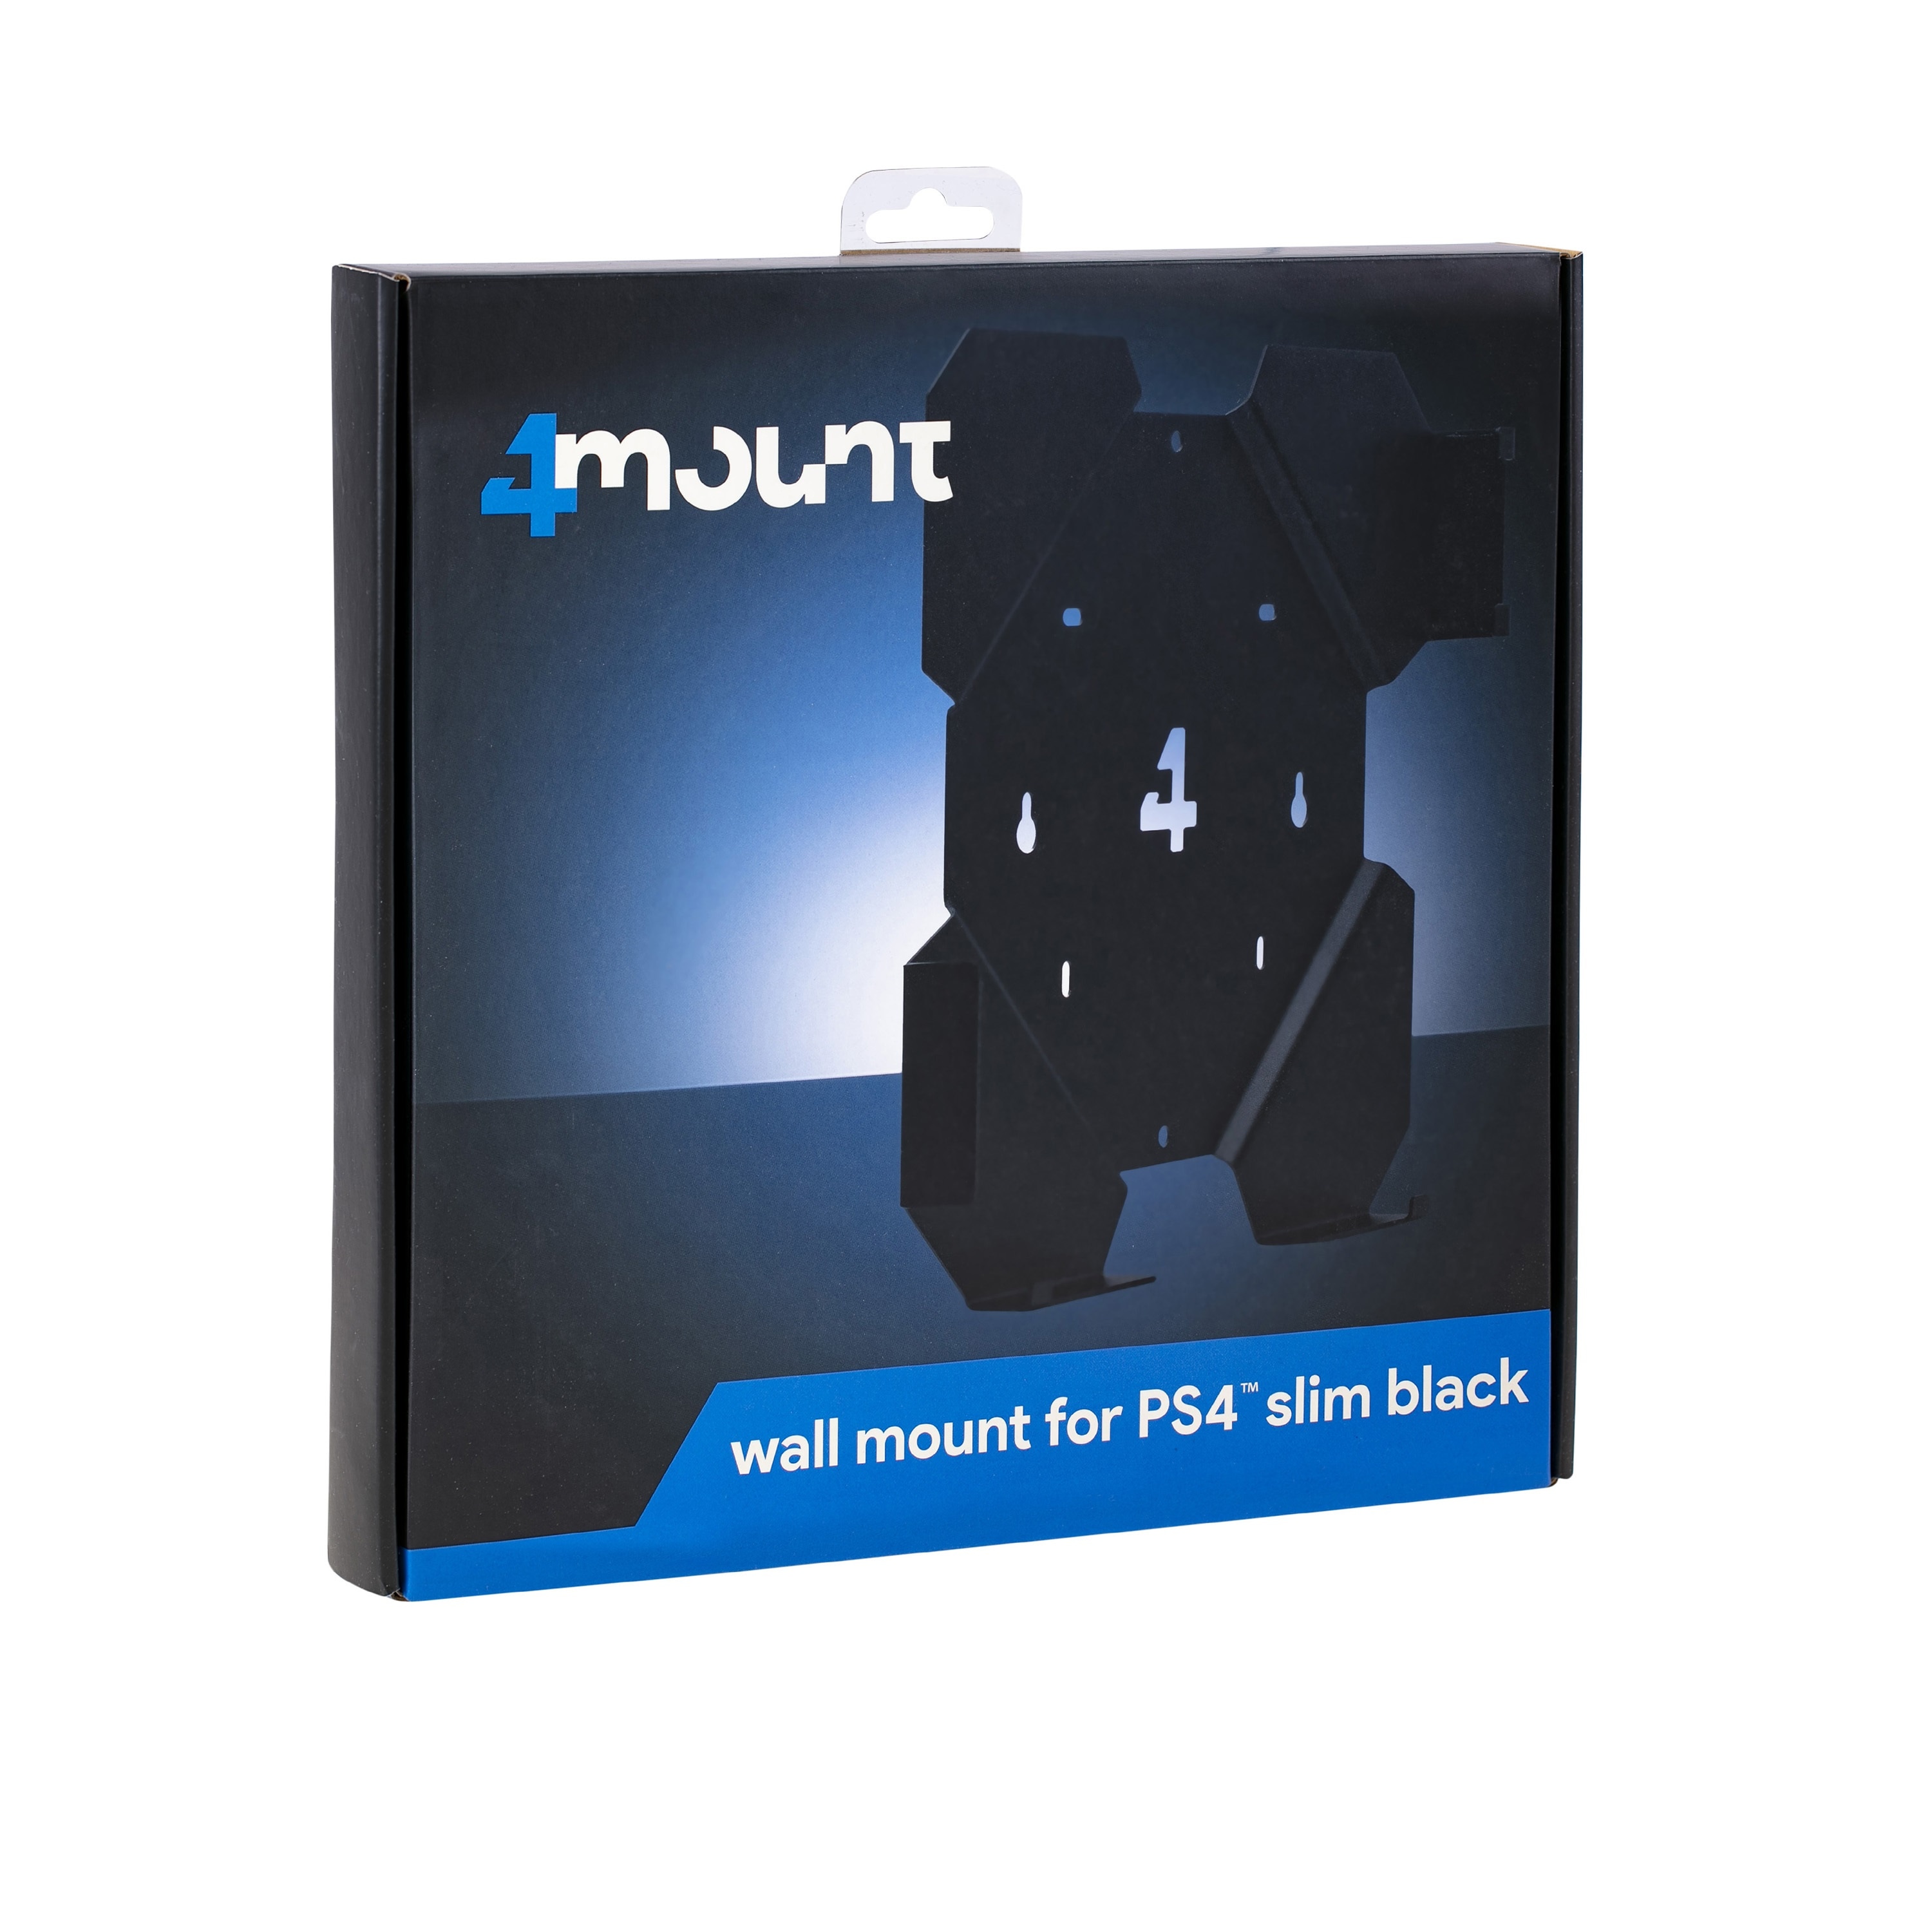 4MOUNT WALL MOUNT FOR PS4 PLAYSTATION 4 SLIM BLACK SET - 9